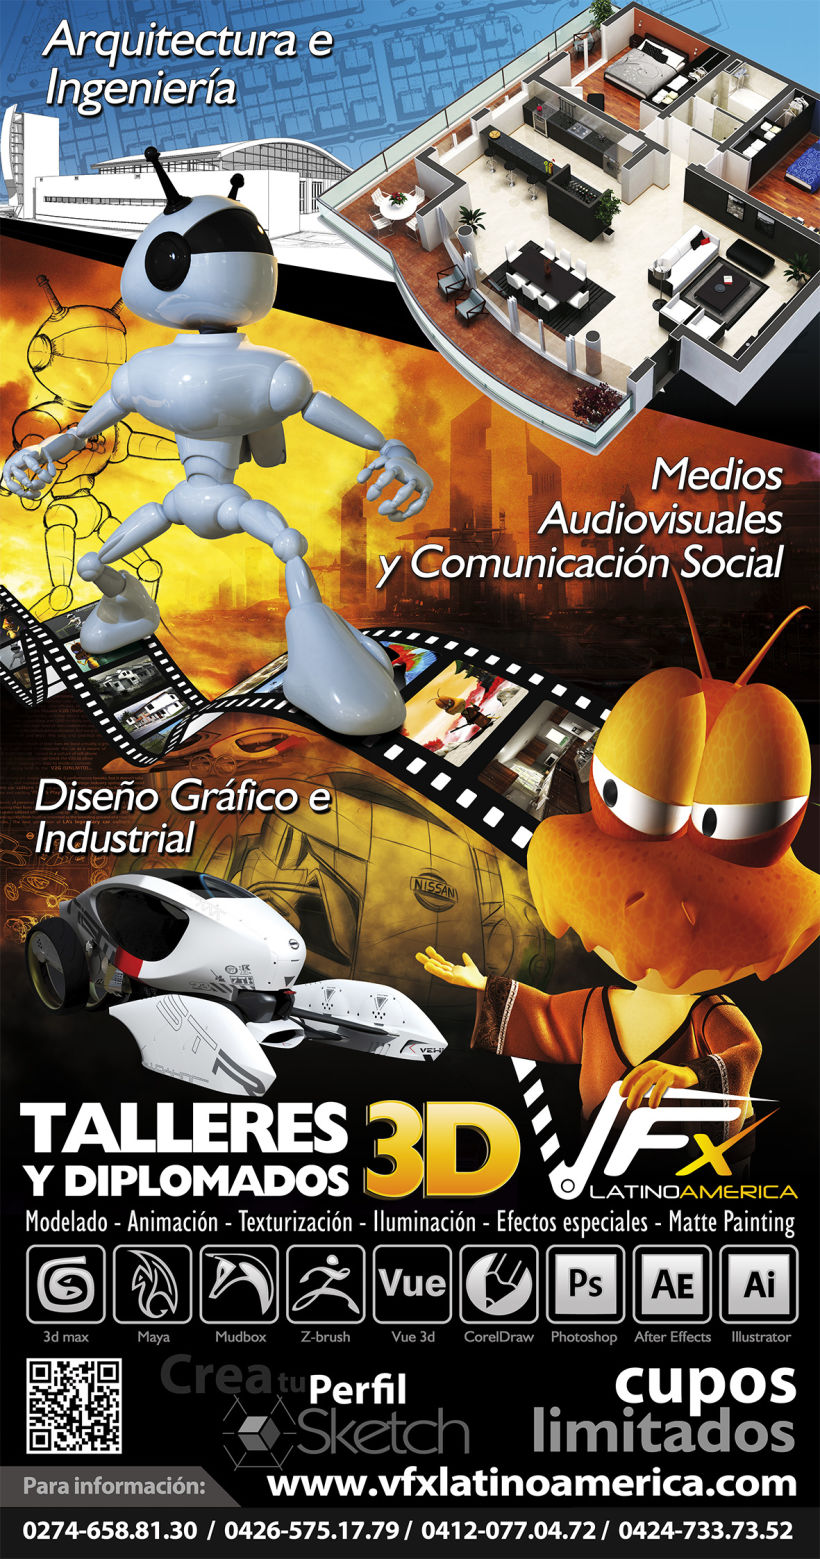 VFX Latinoamerica / talleres y Diplomados 3D 0